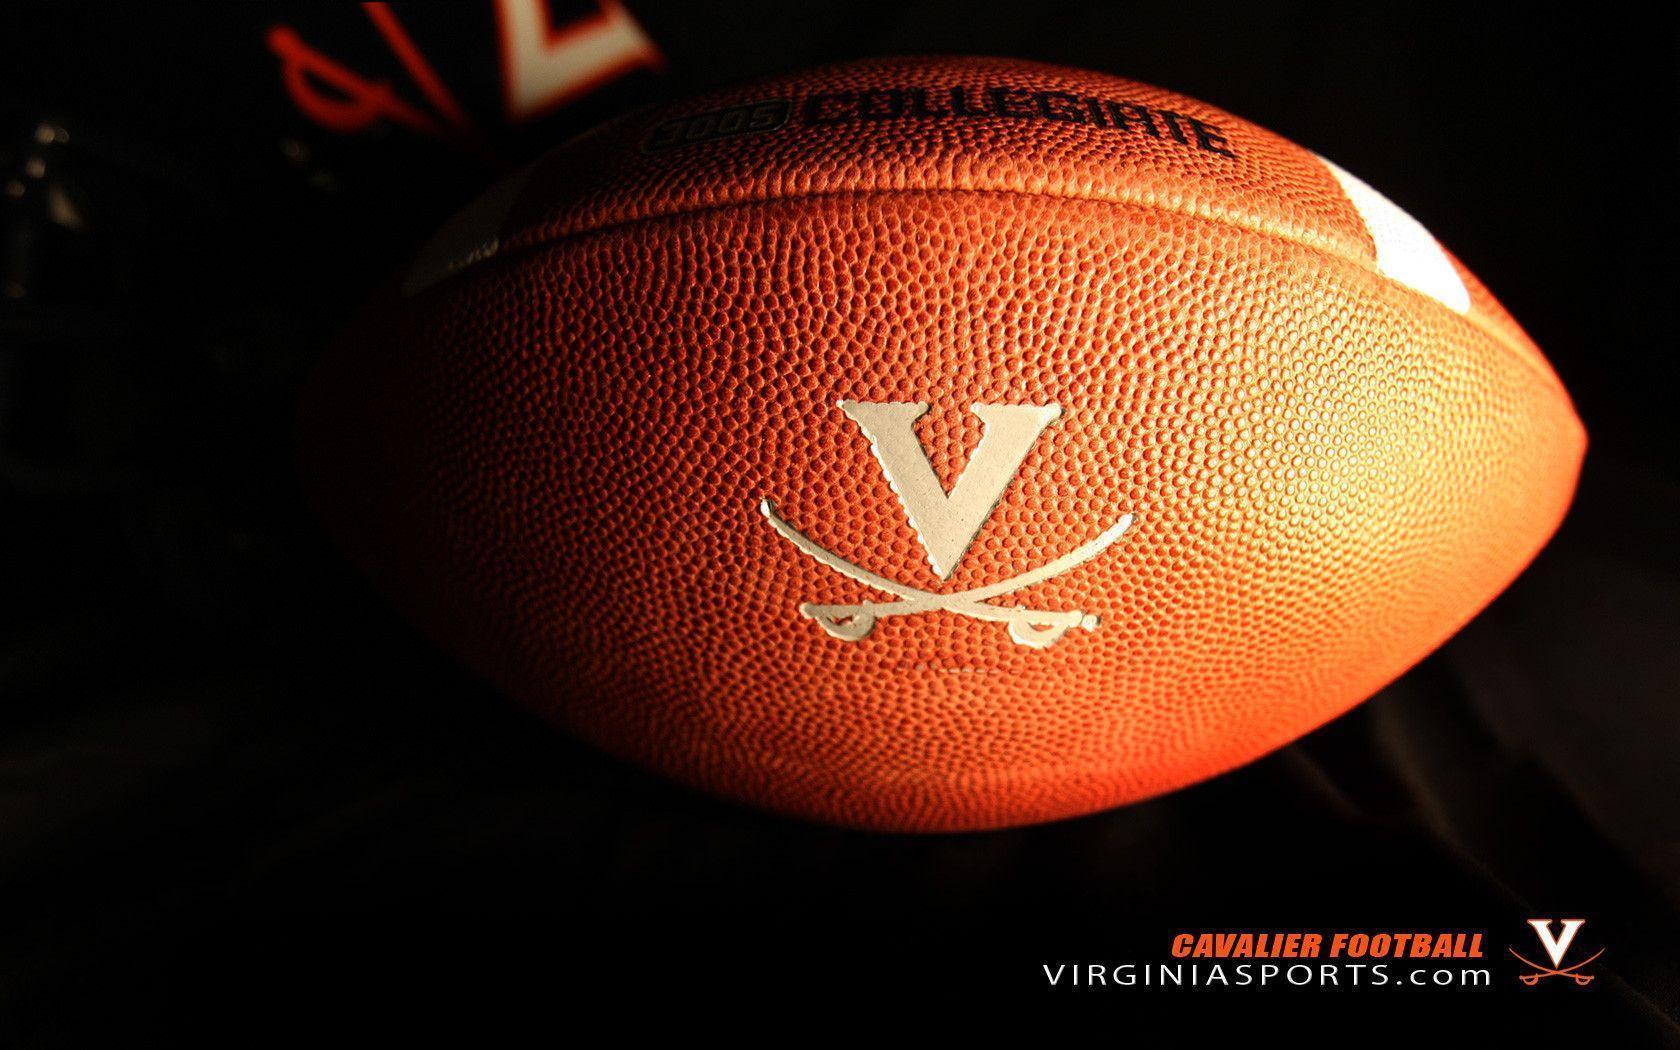 VirginiaSports.com of Virginia Official Athletics